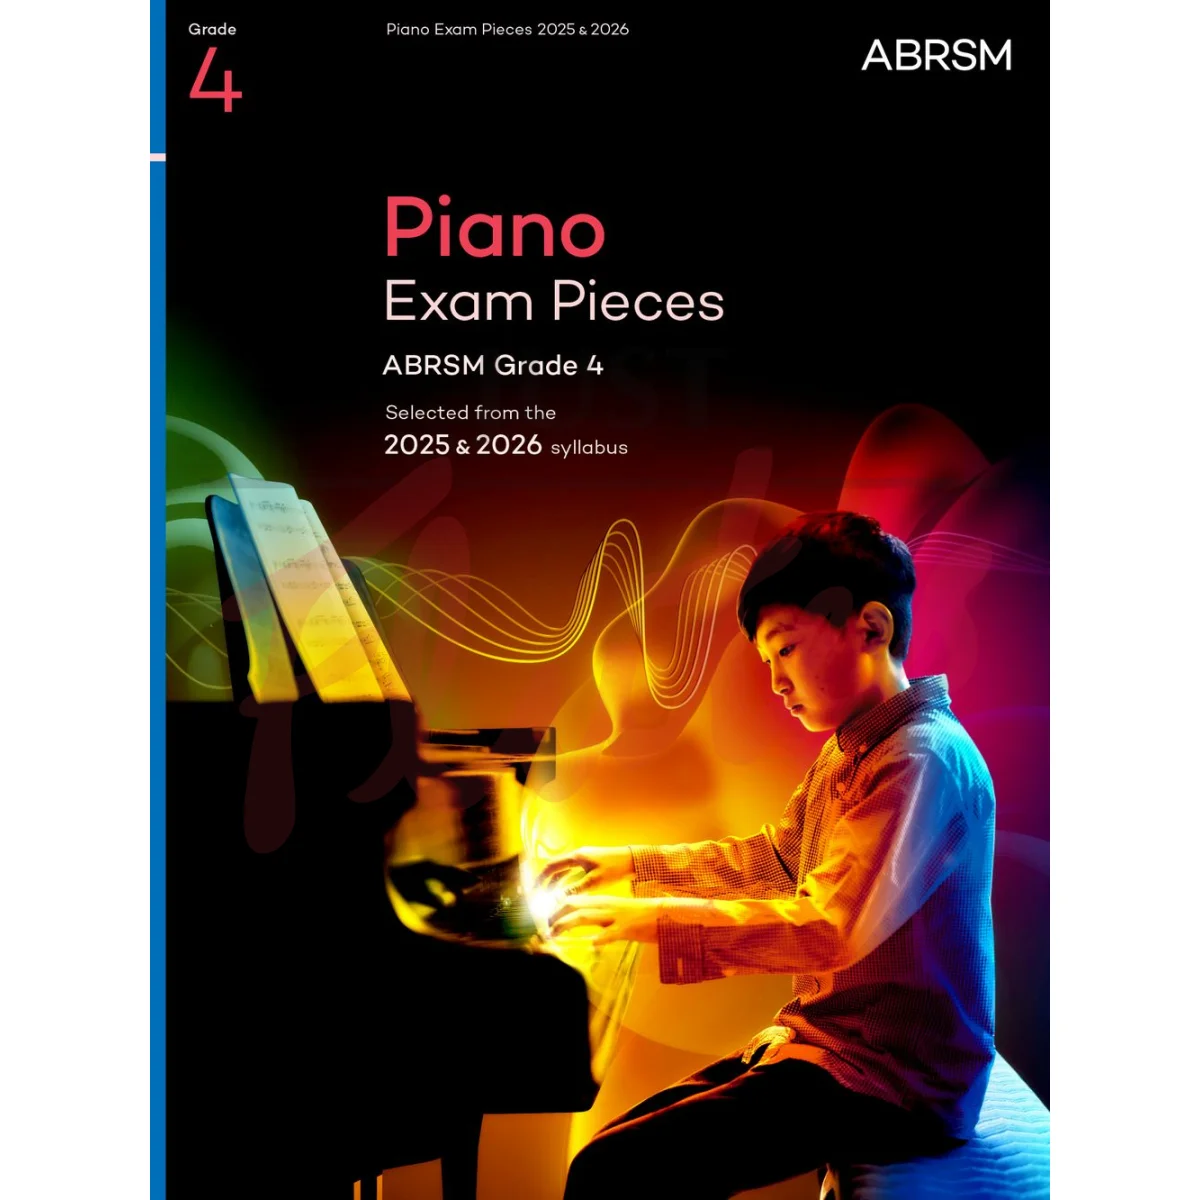 Piano Exam Pieces 2025-26, Grade 4